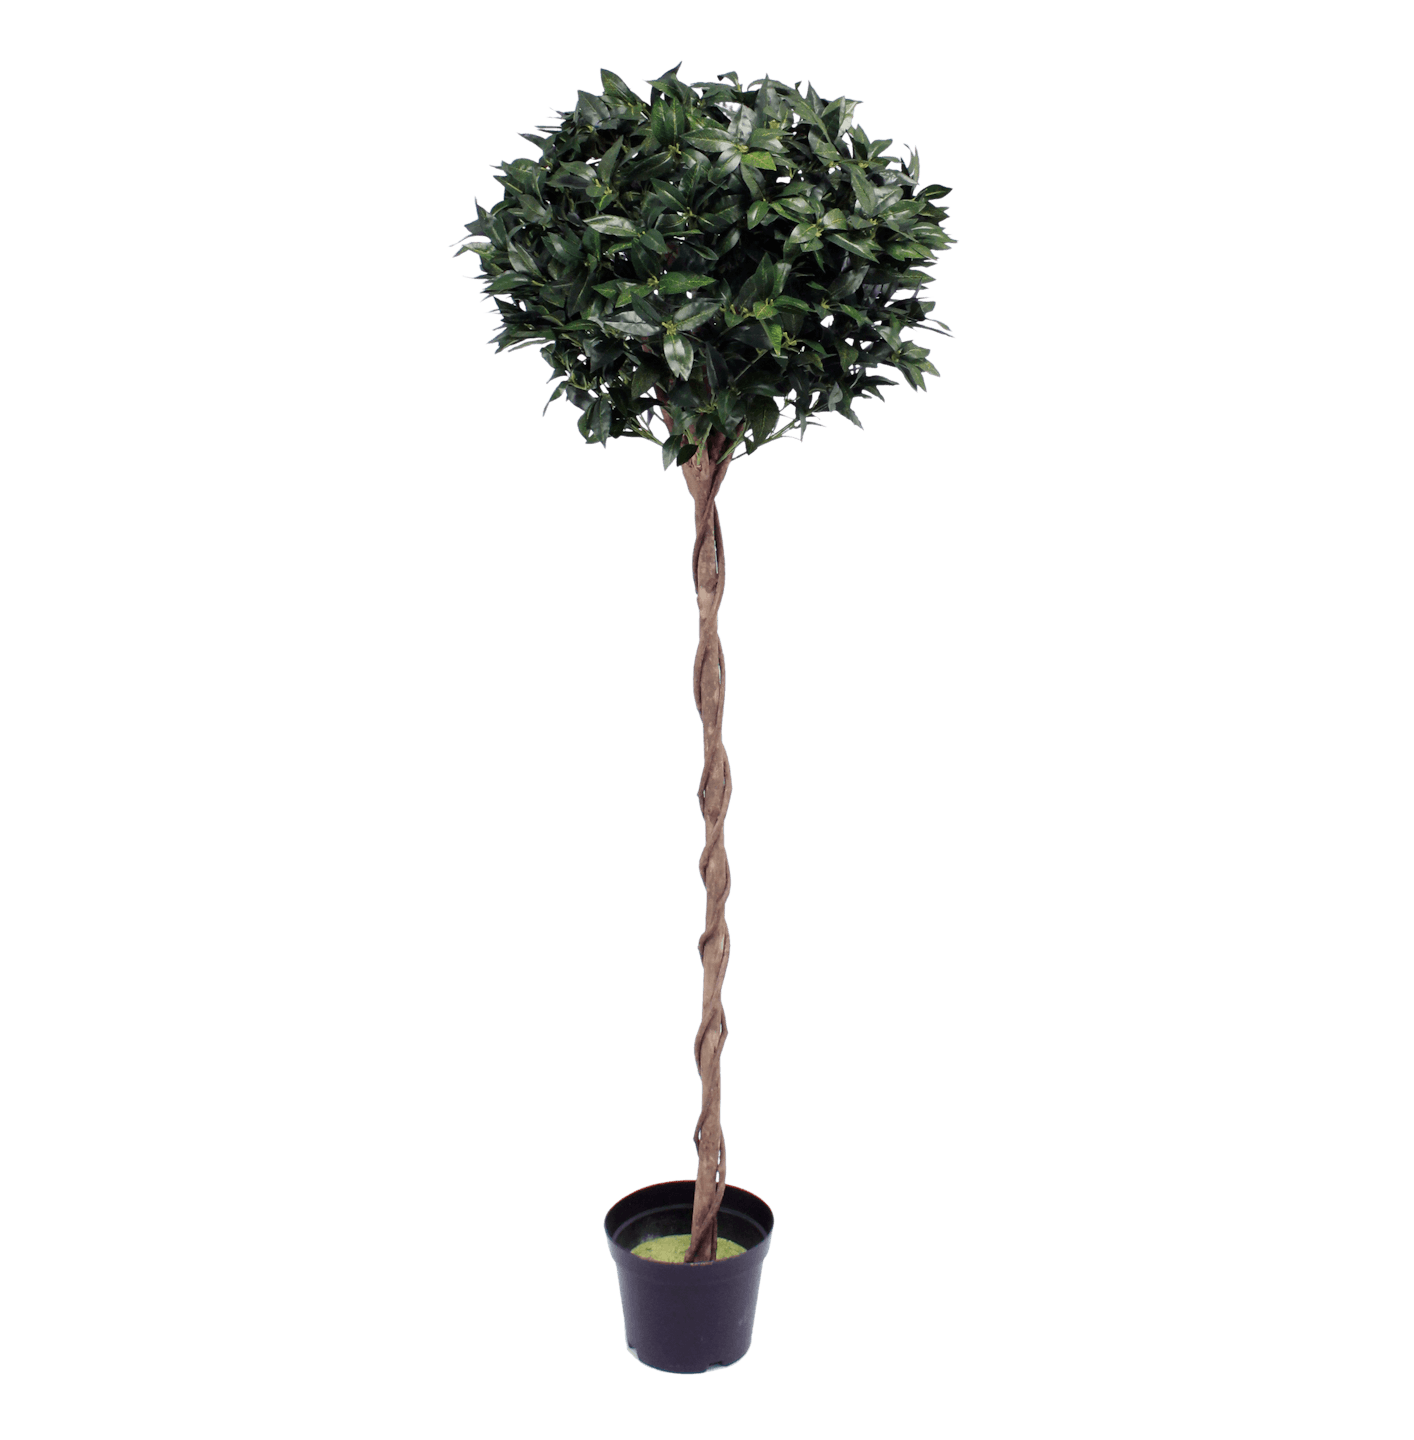 Blooming Artificial 6ft / 180cm artificial bay laurel tree